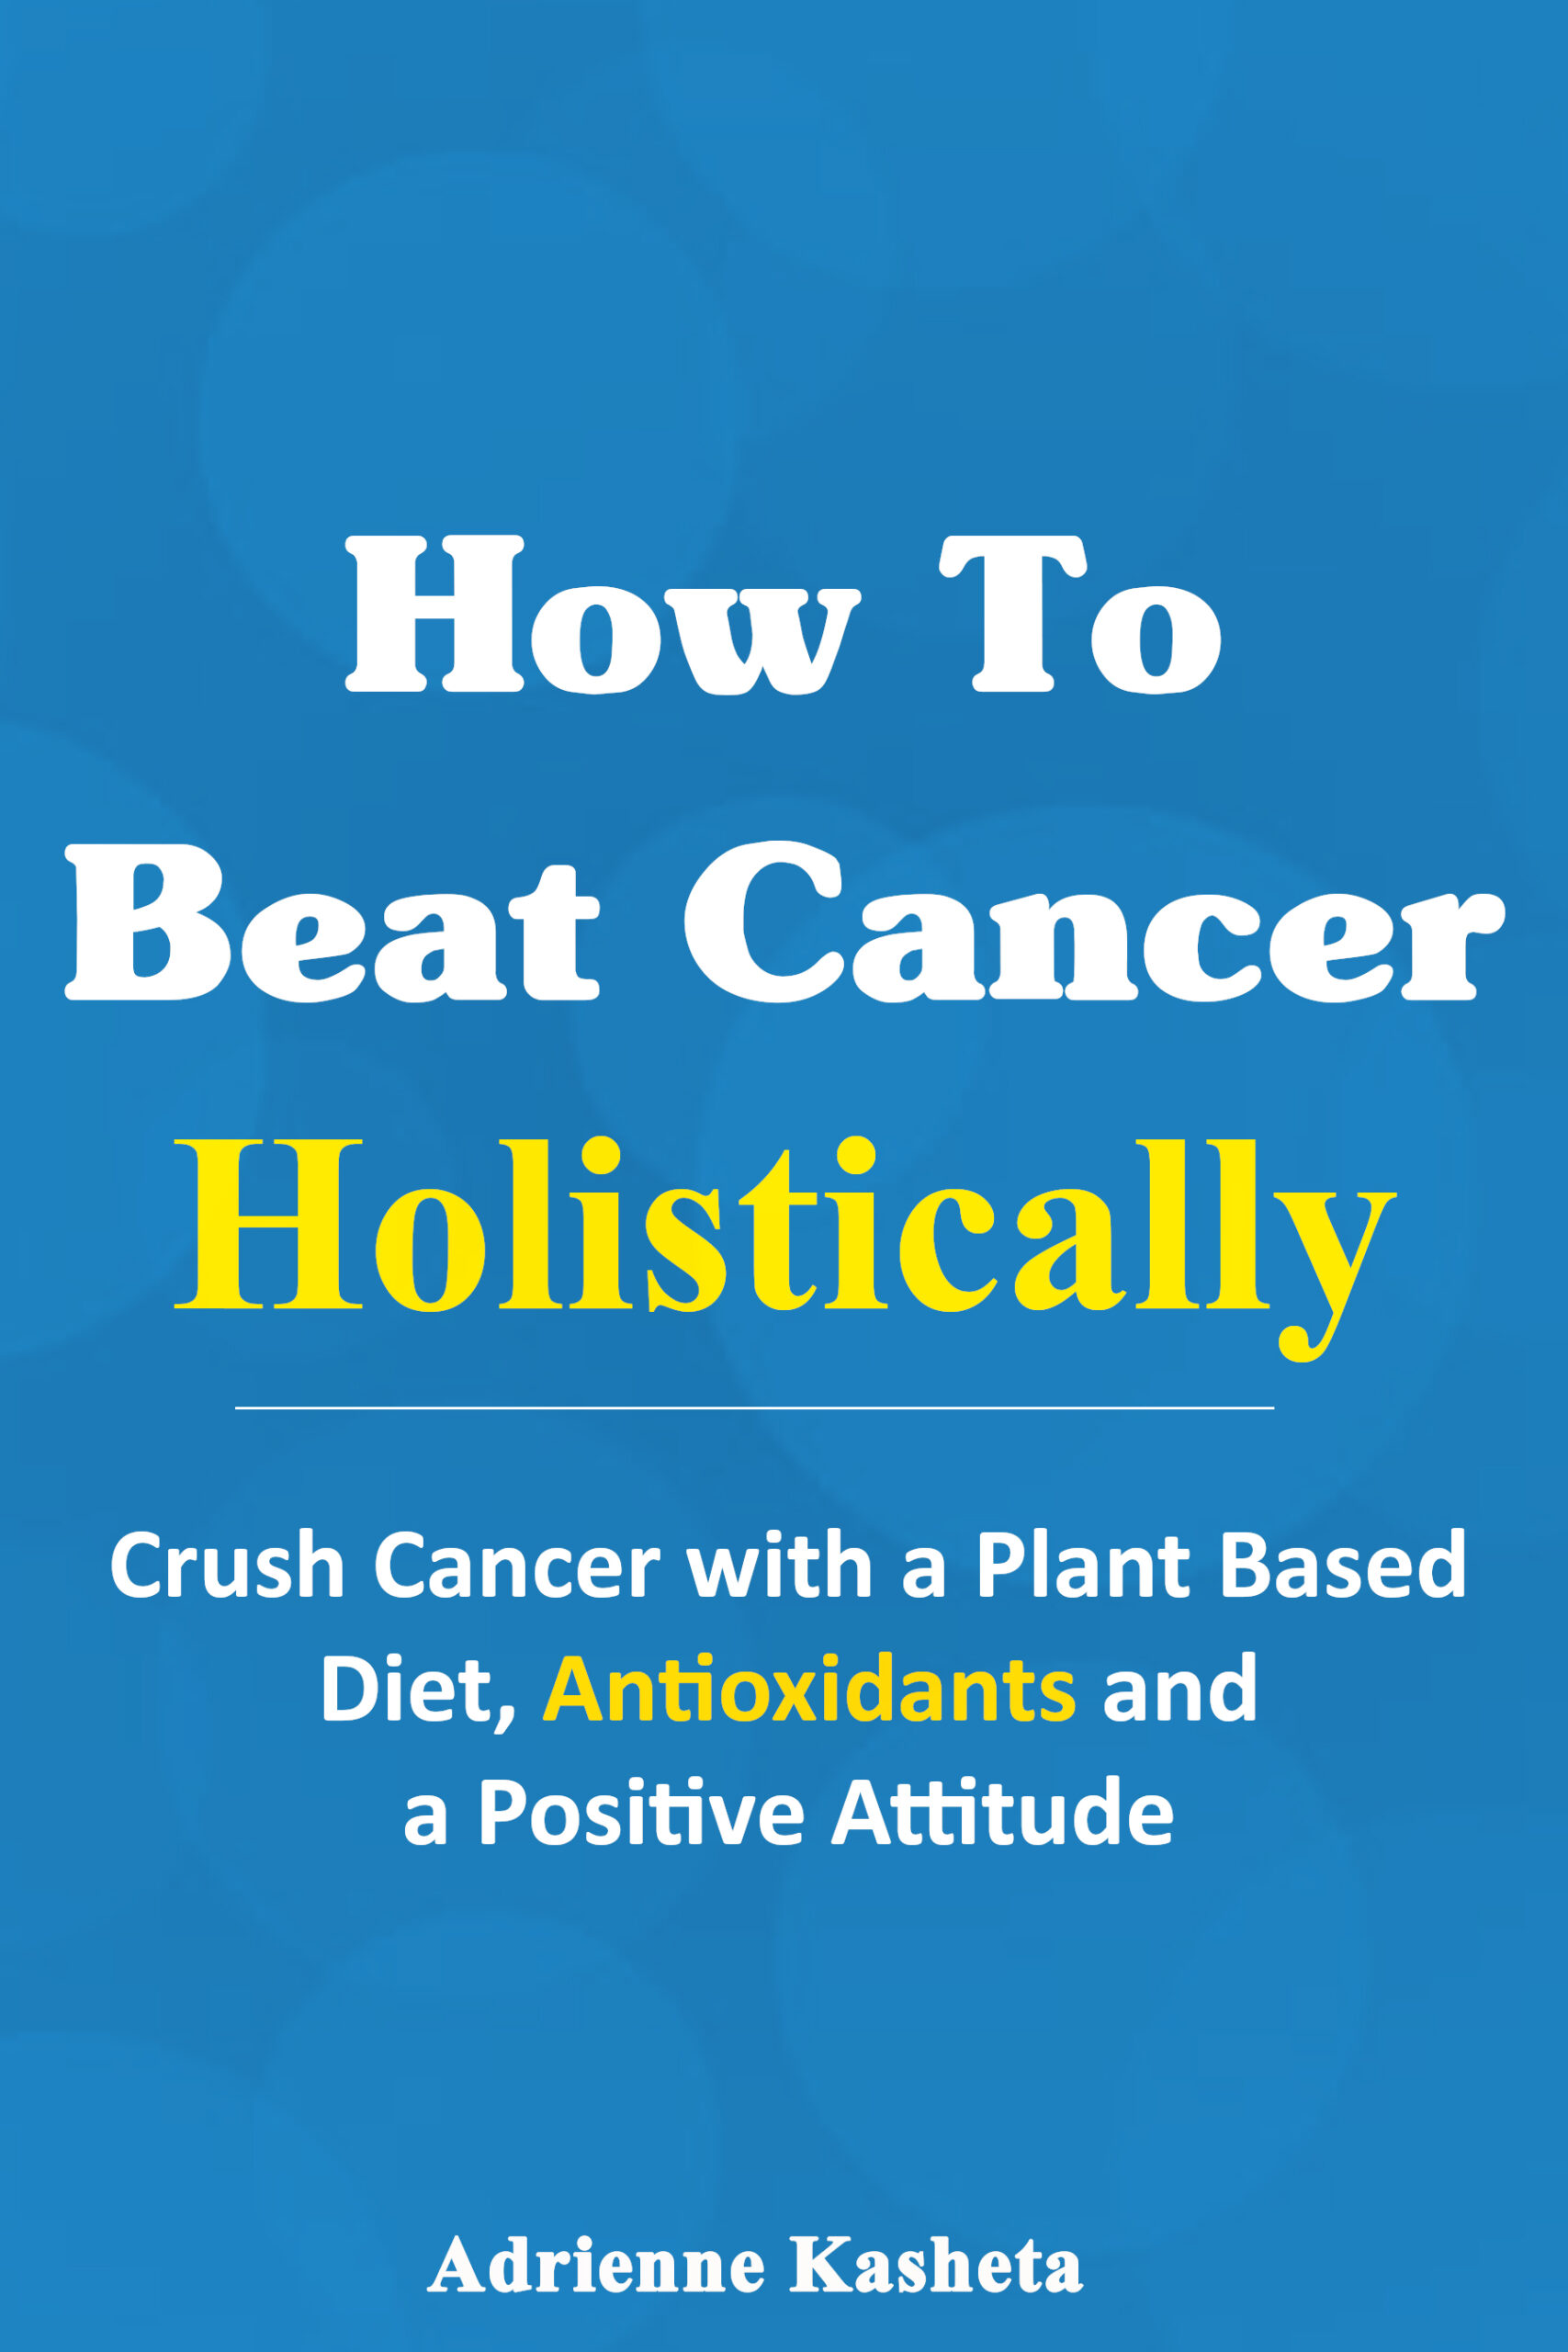 FREE: How to Beat Cancer Holistically by Adrienne Kasheta